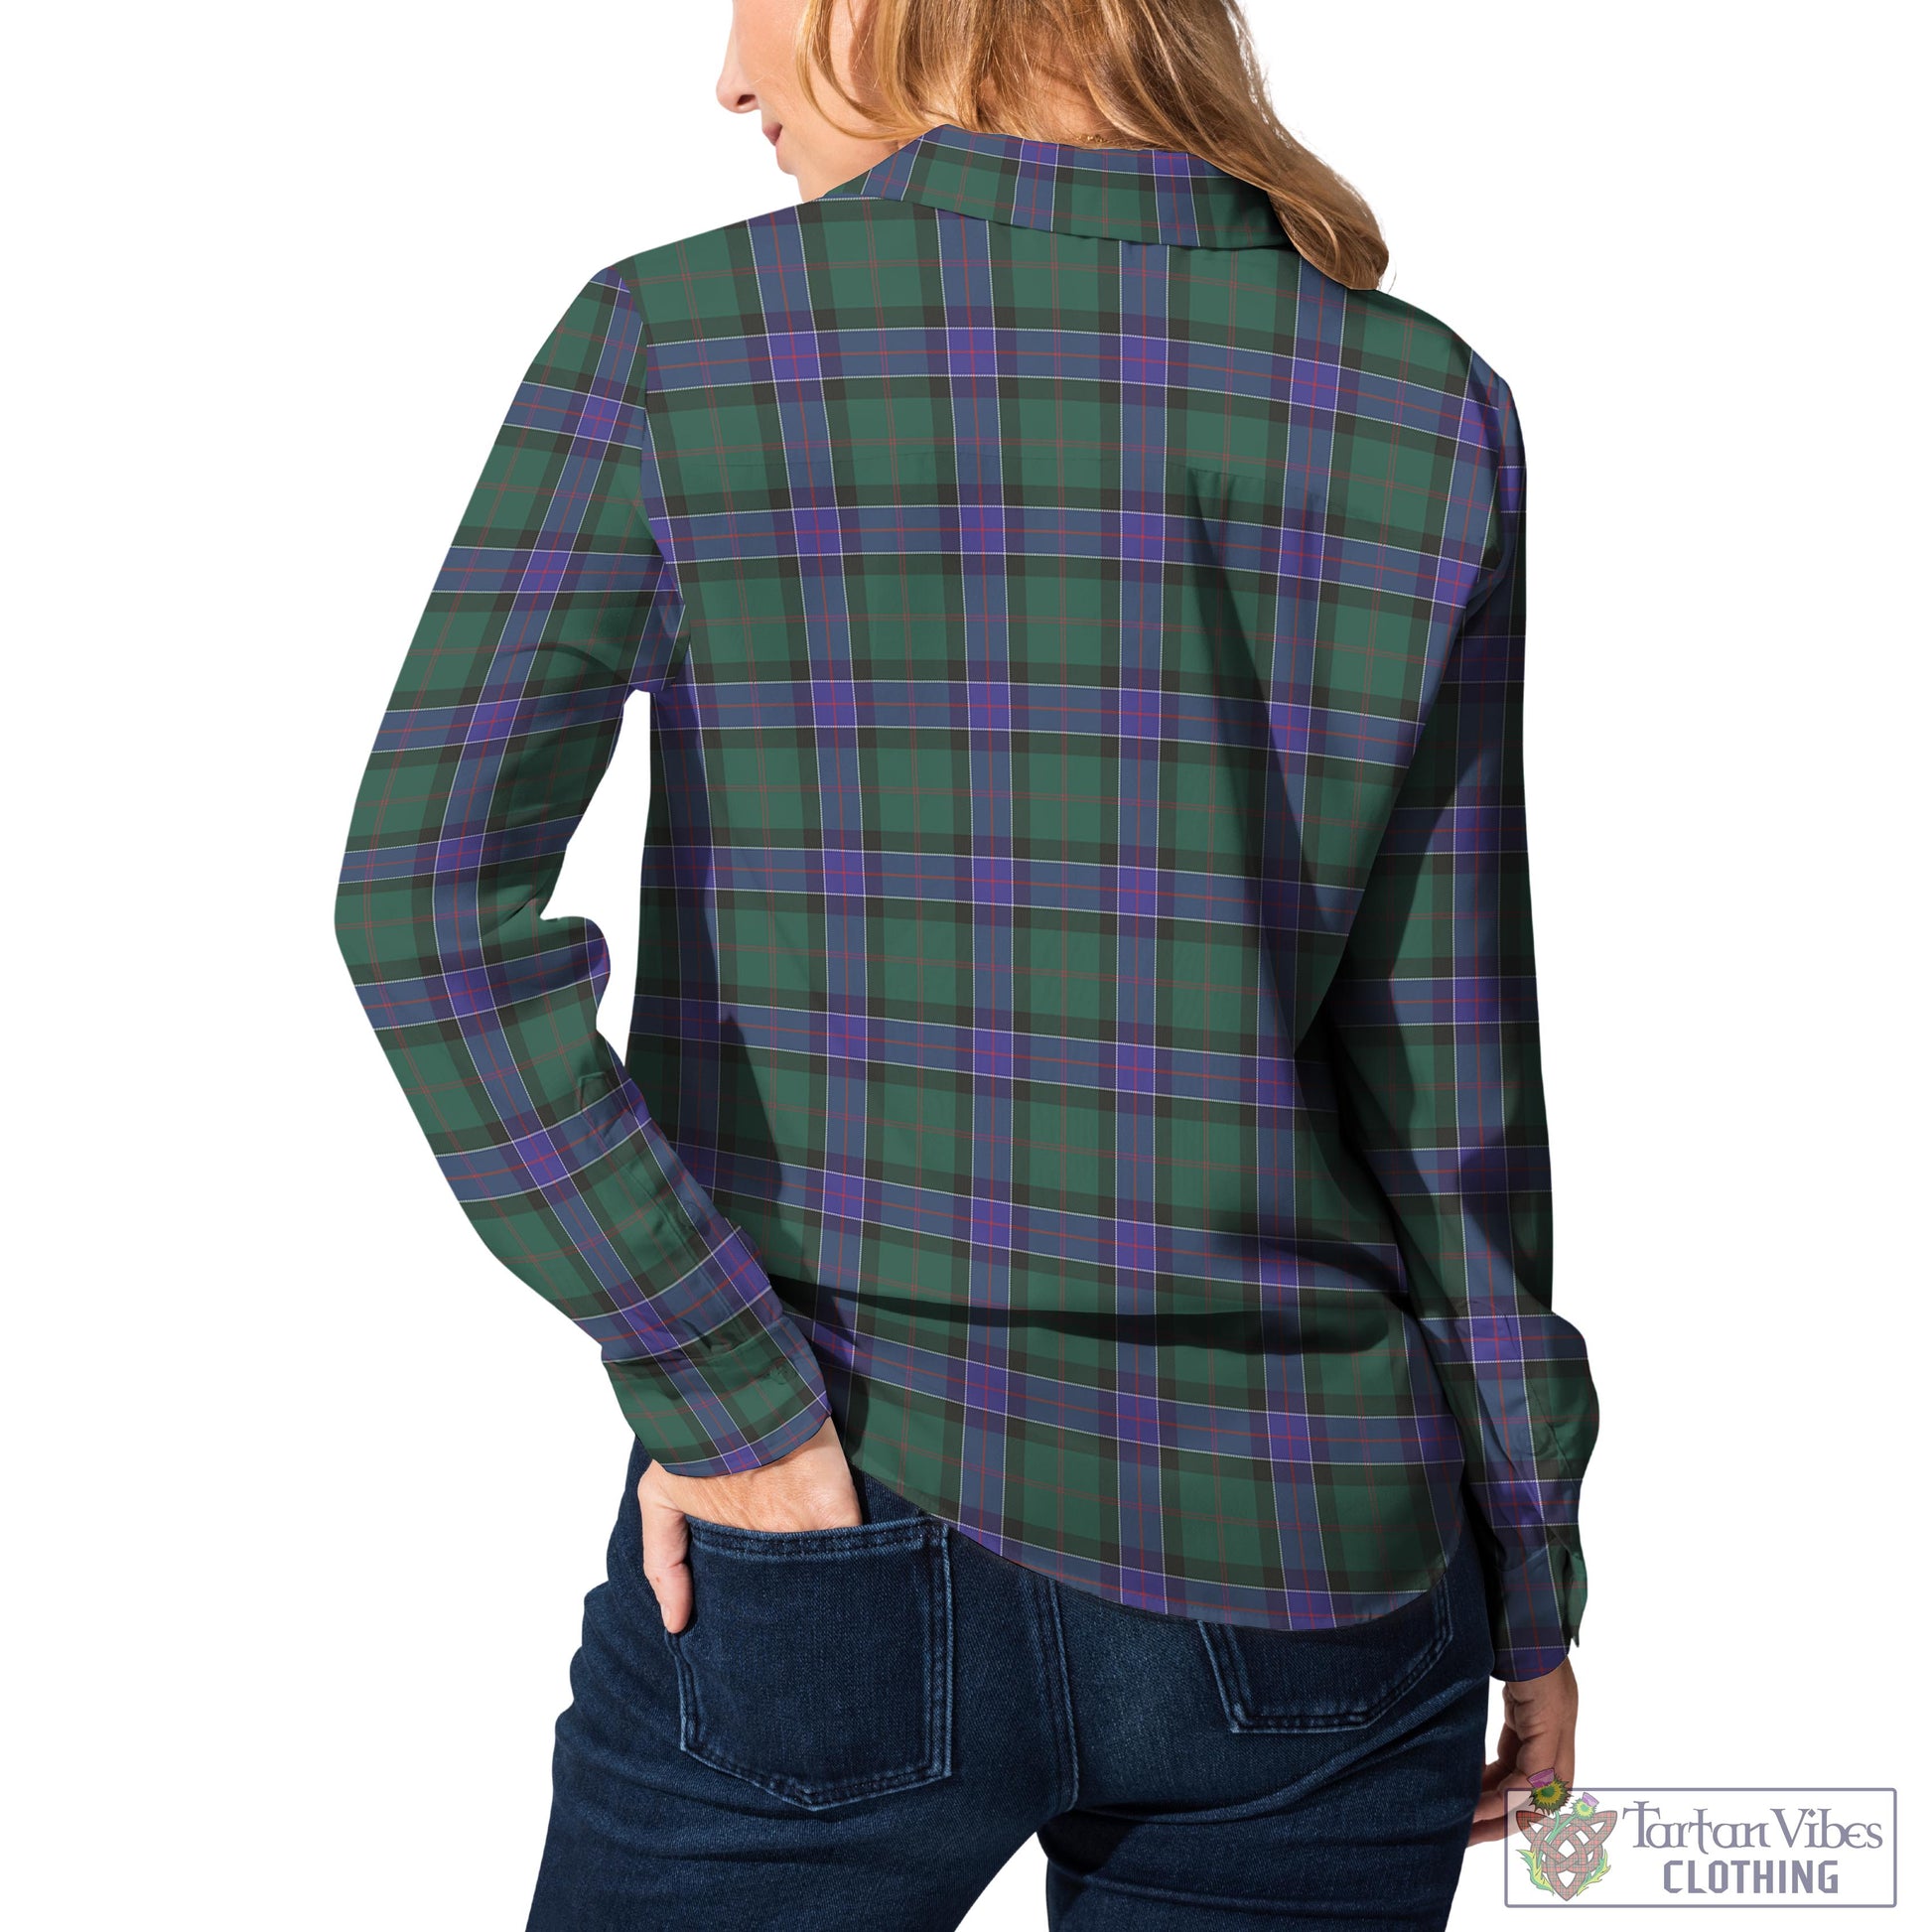 Tartan Vibes Clothing Sinclair Hunting Modern Tartan Womens Casual Shirt with Family Crest